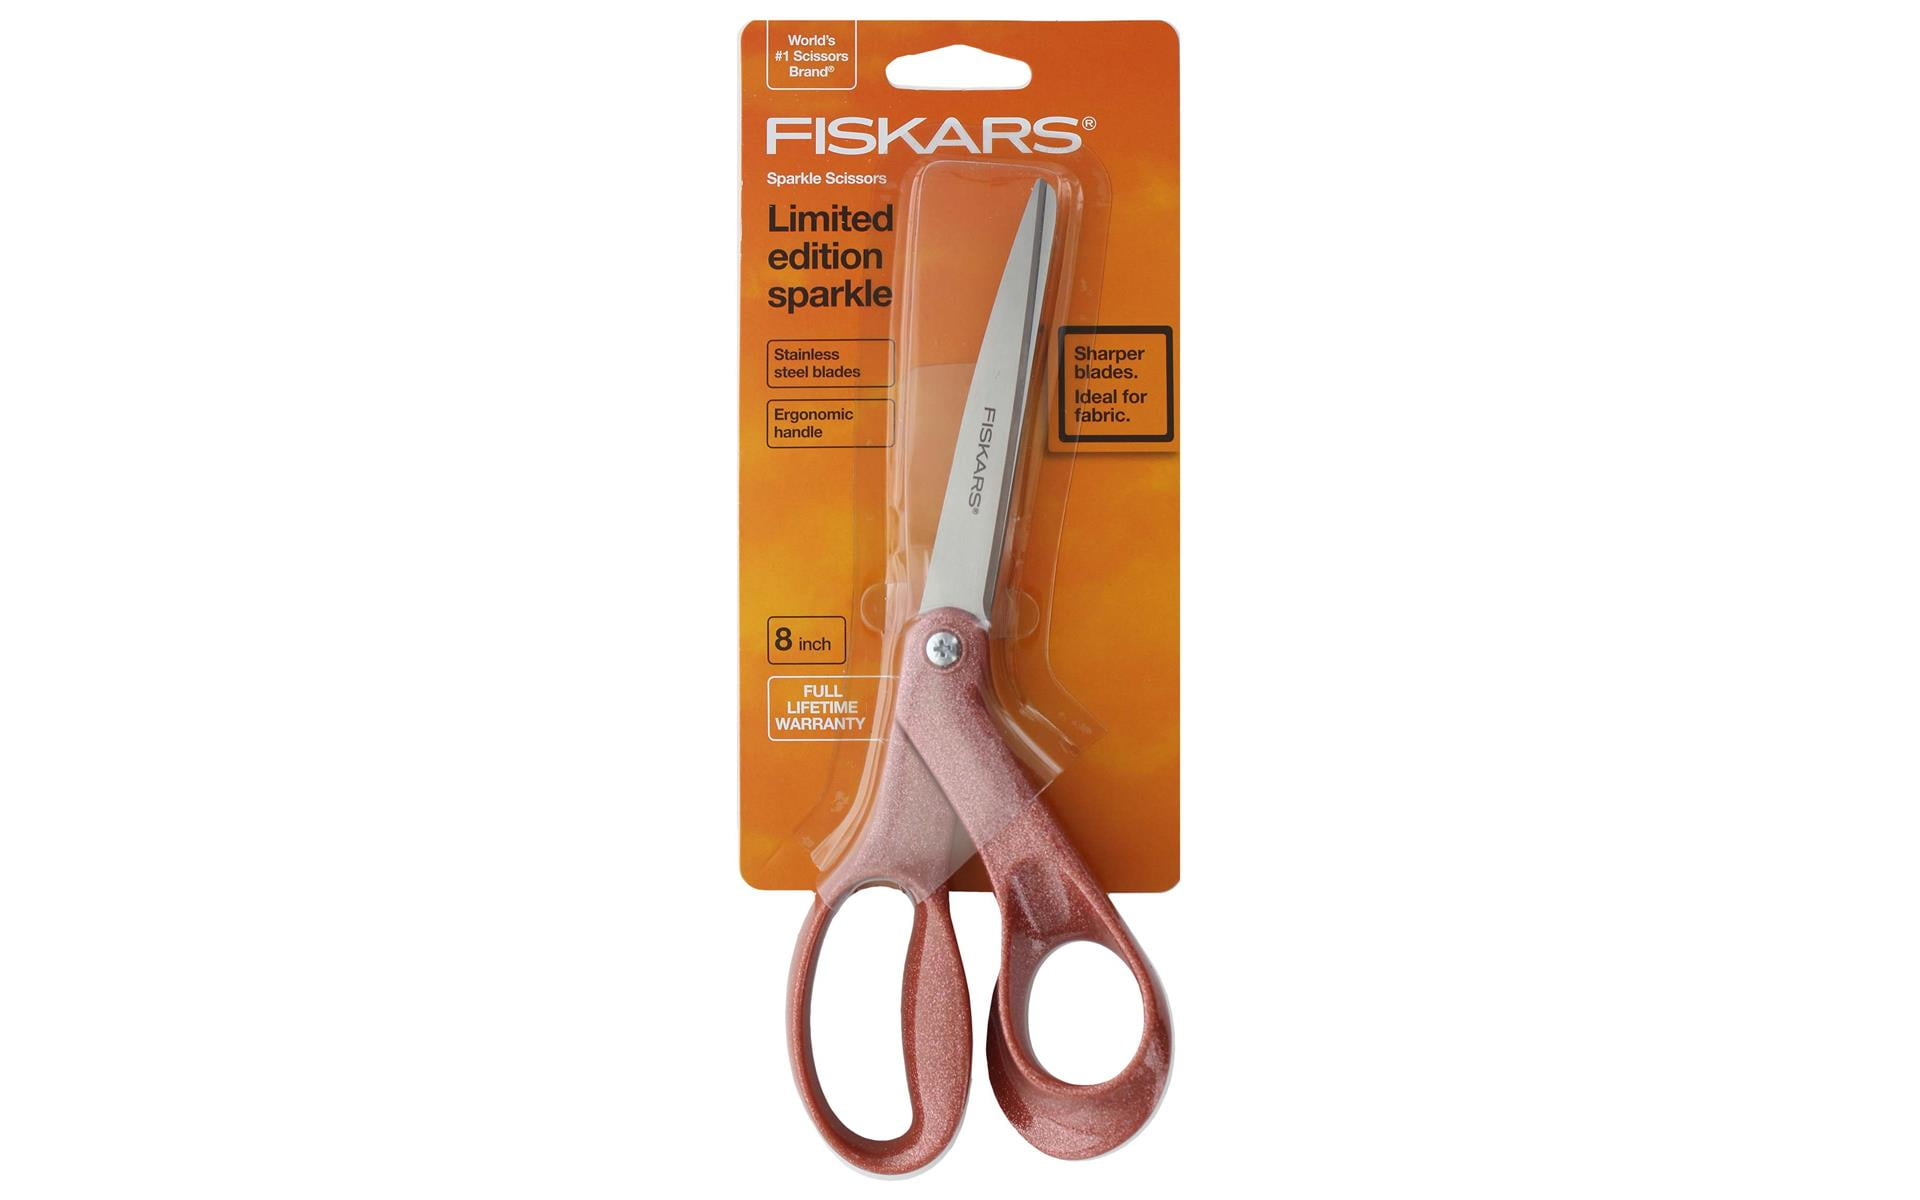 Sparco, SPR99830, Child's Safety Scissors Set, 6 / Pack 